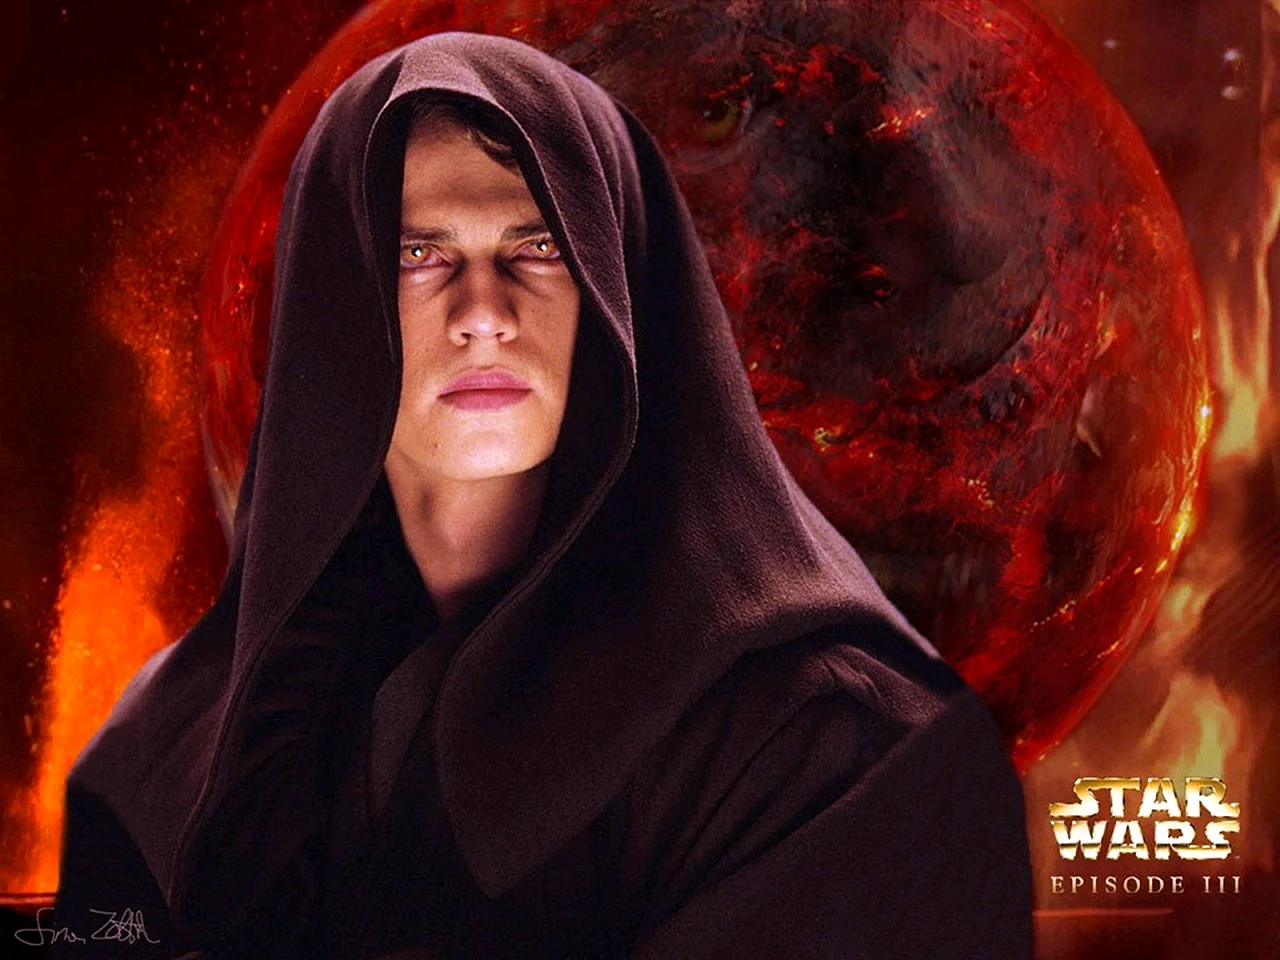 Star Wars Anakin Skywalker Wallpaper